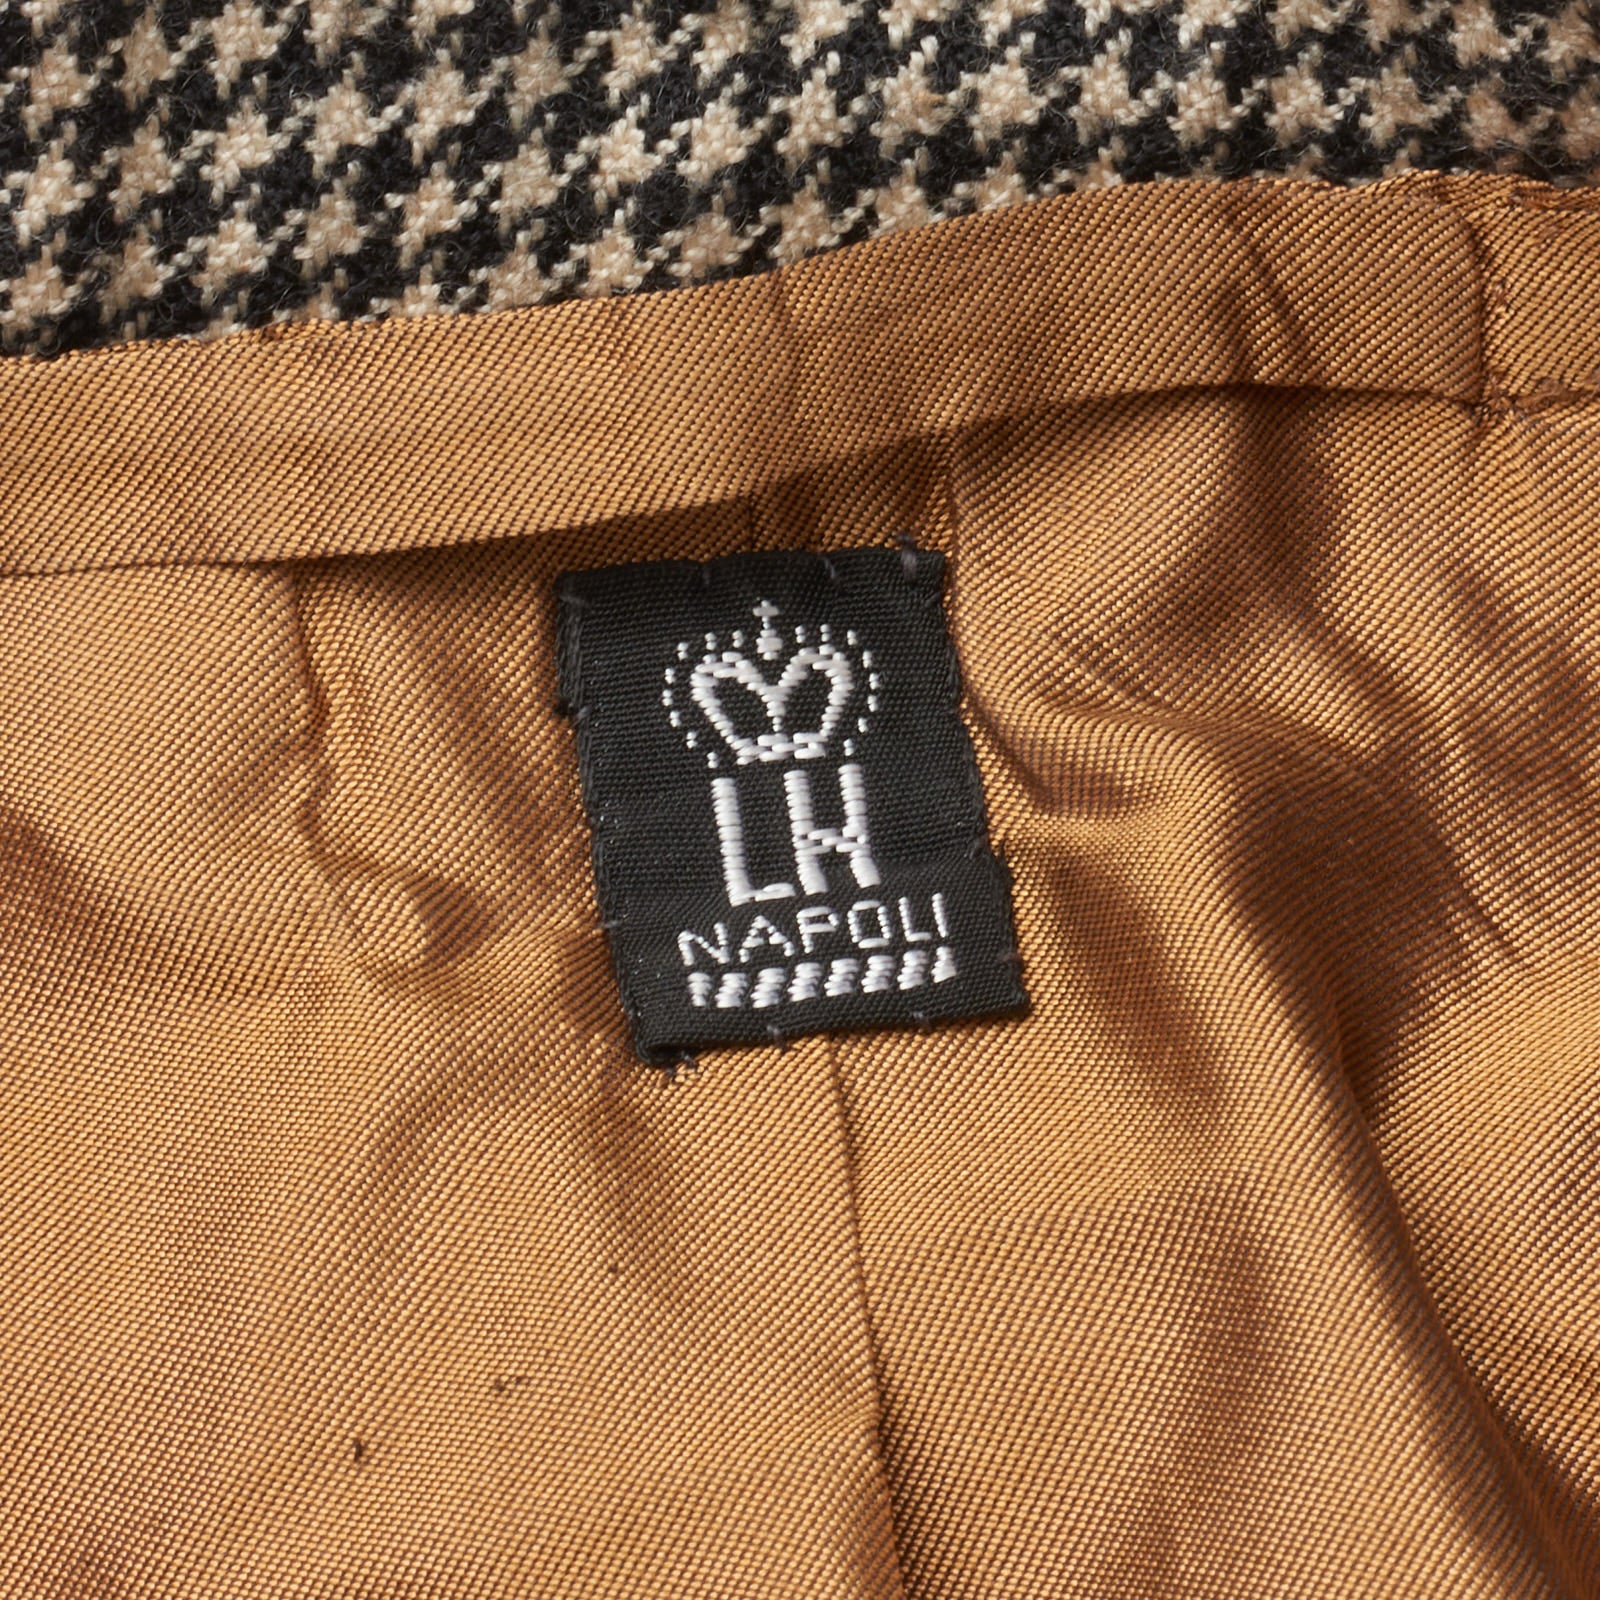 RUBINACCI LH Handmade Bespoke Houndstooth Cashmere DB Jacket EU 50 NEW US 40 RUBINACCI